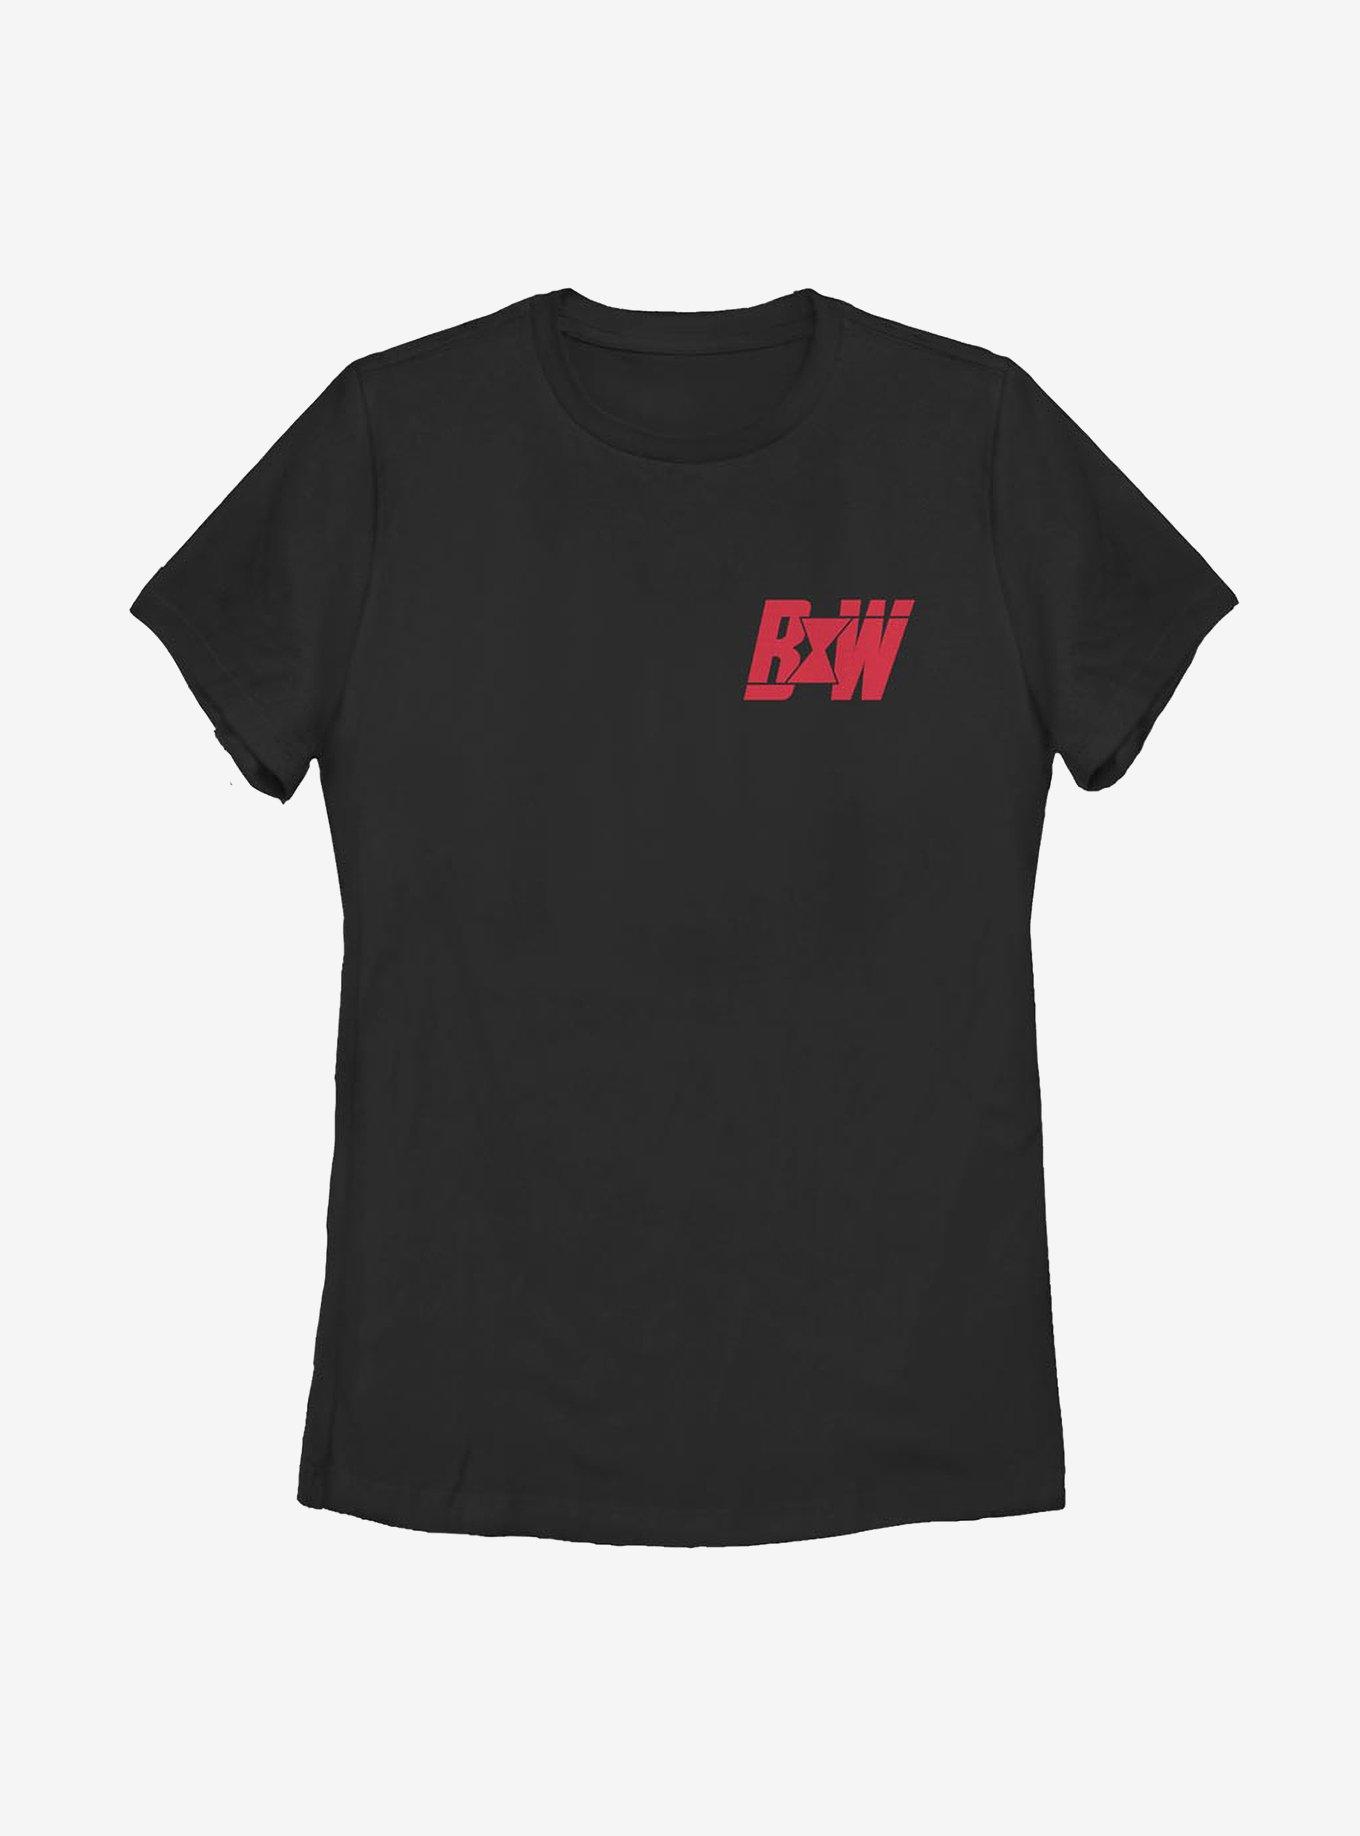 Marvel Black Widow Logo Chest Hit Womens T-Shirt, BLACK, hi-res